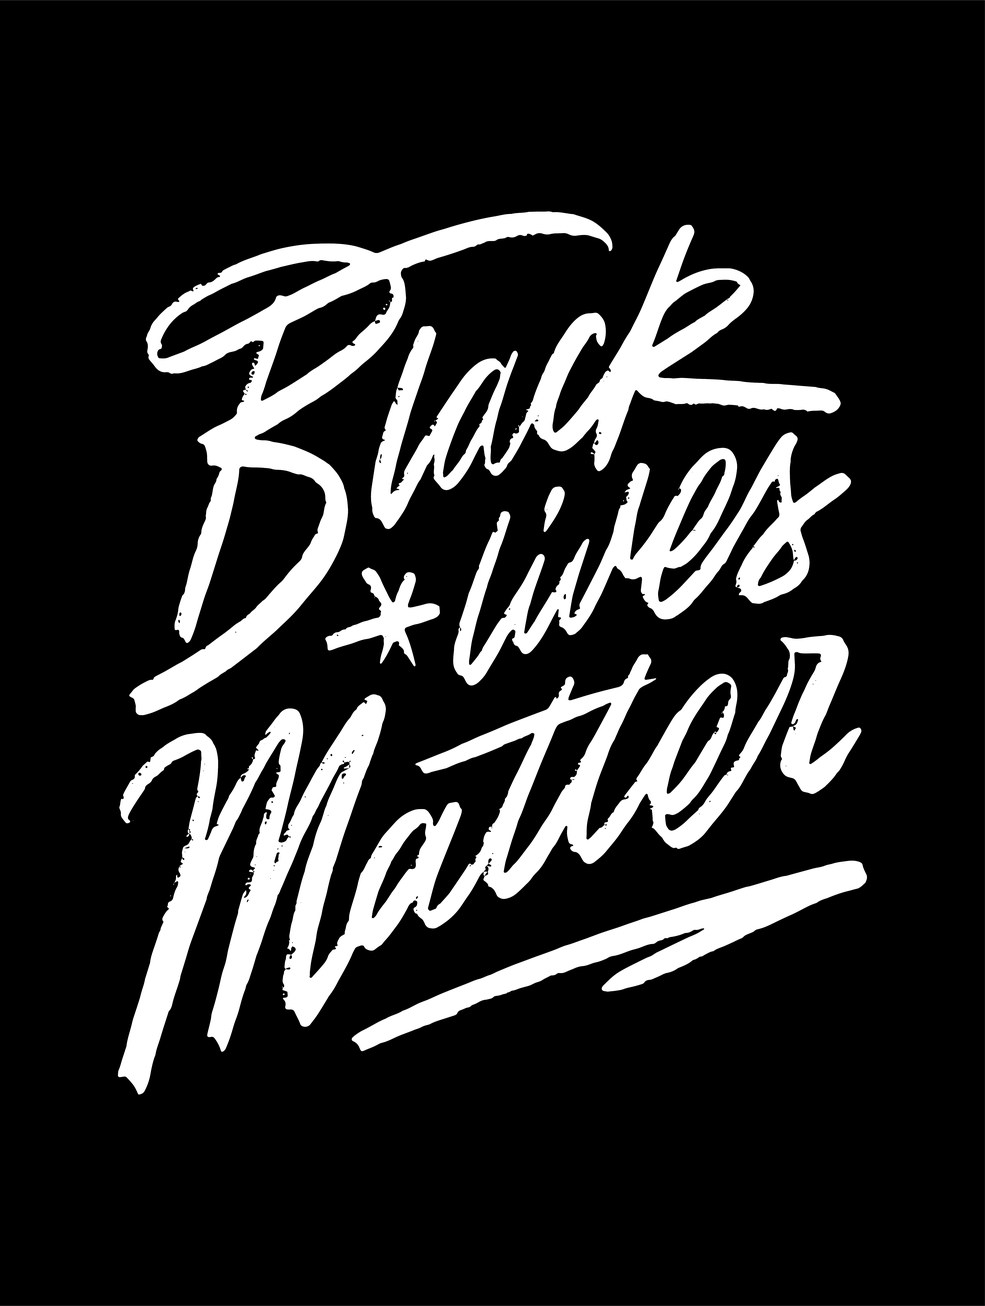 cover photo, article, social media, black lives matter